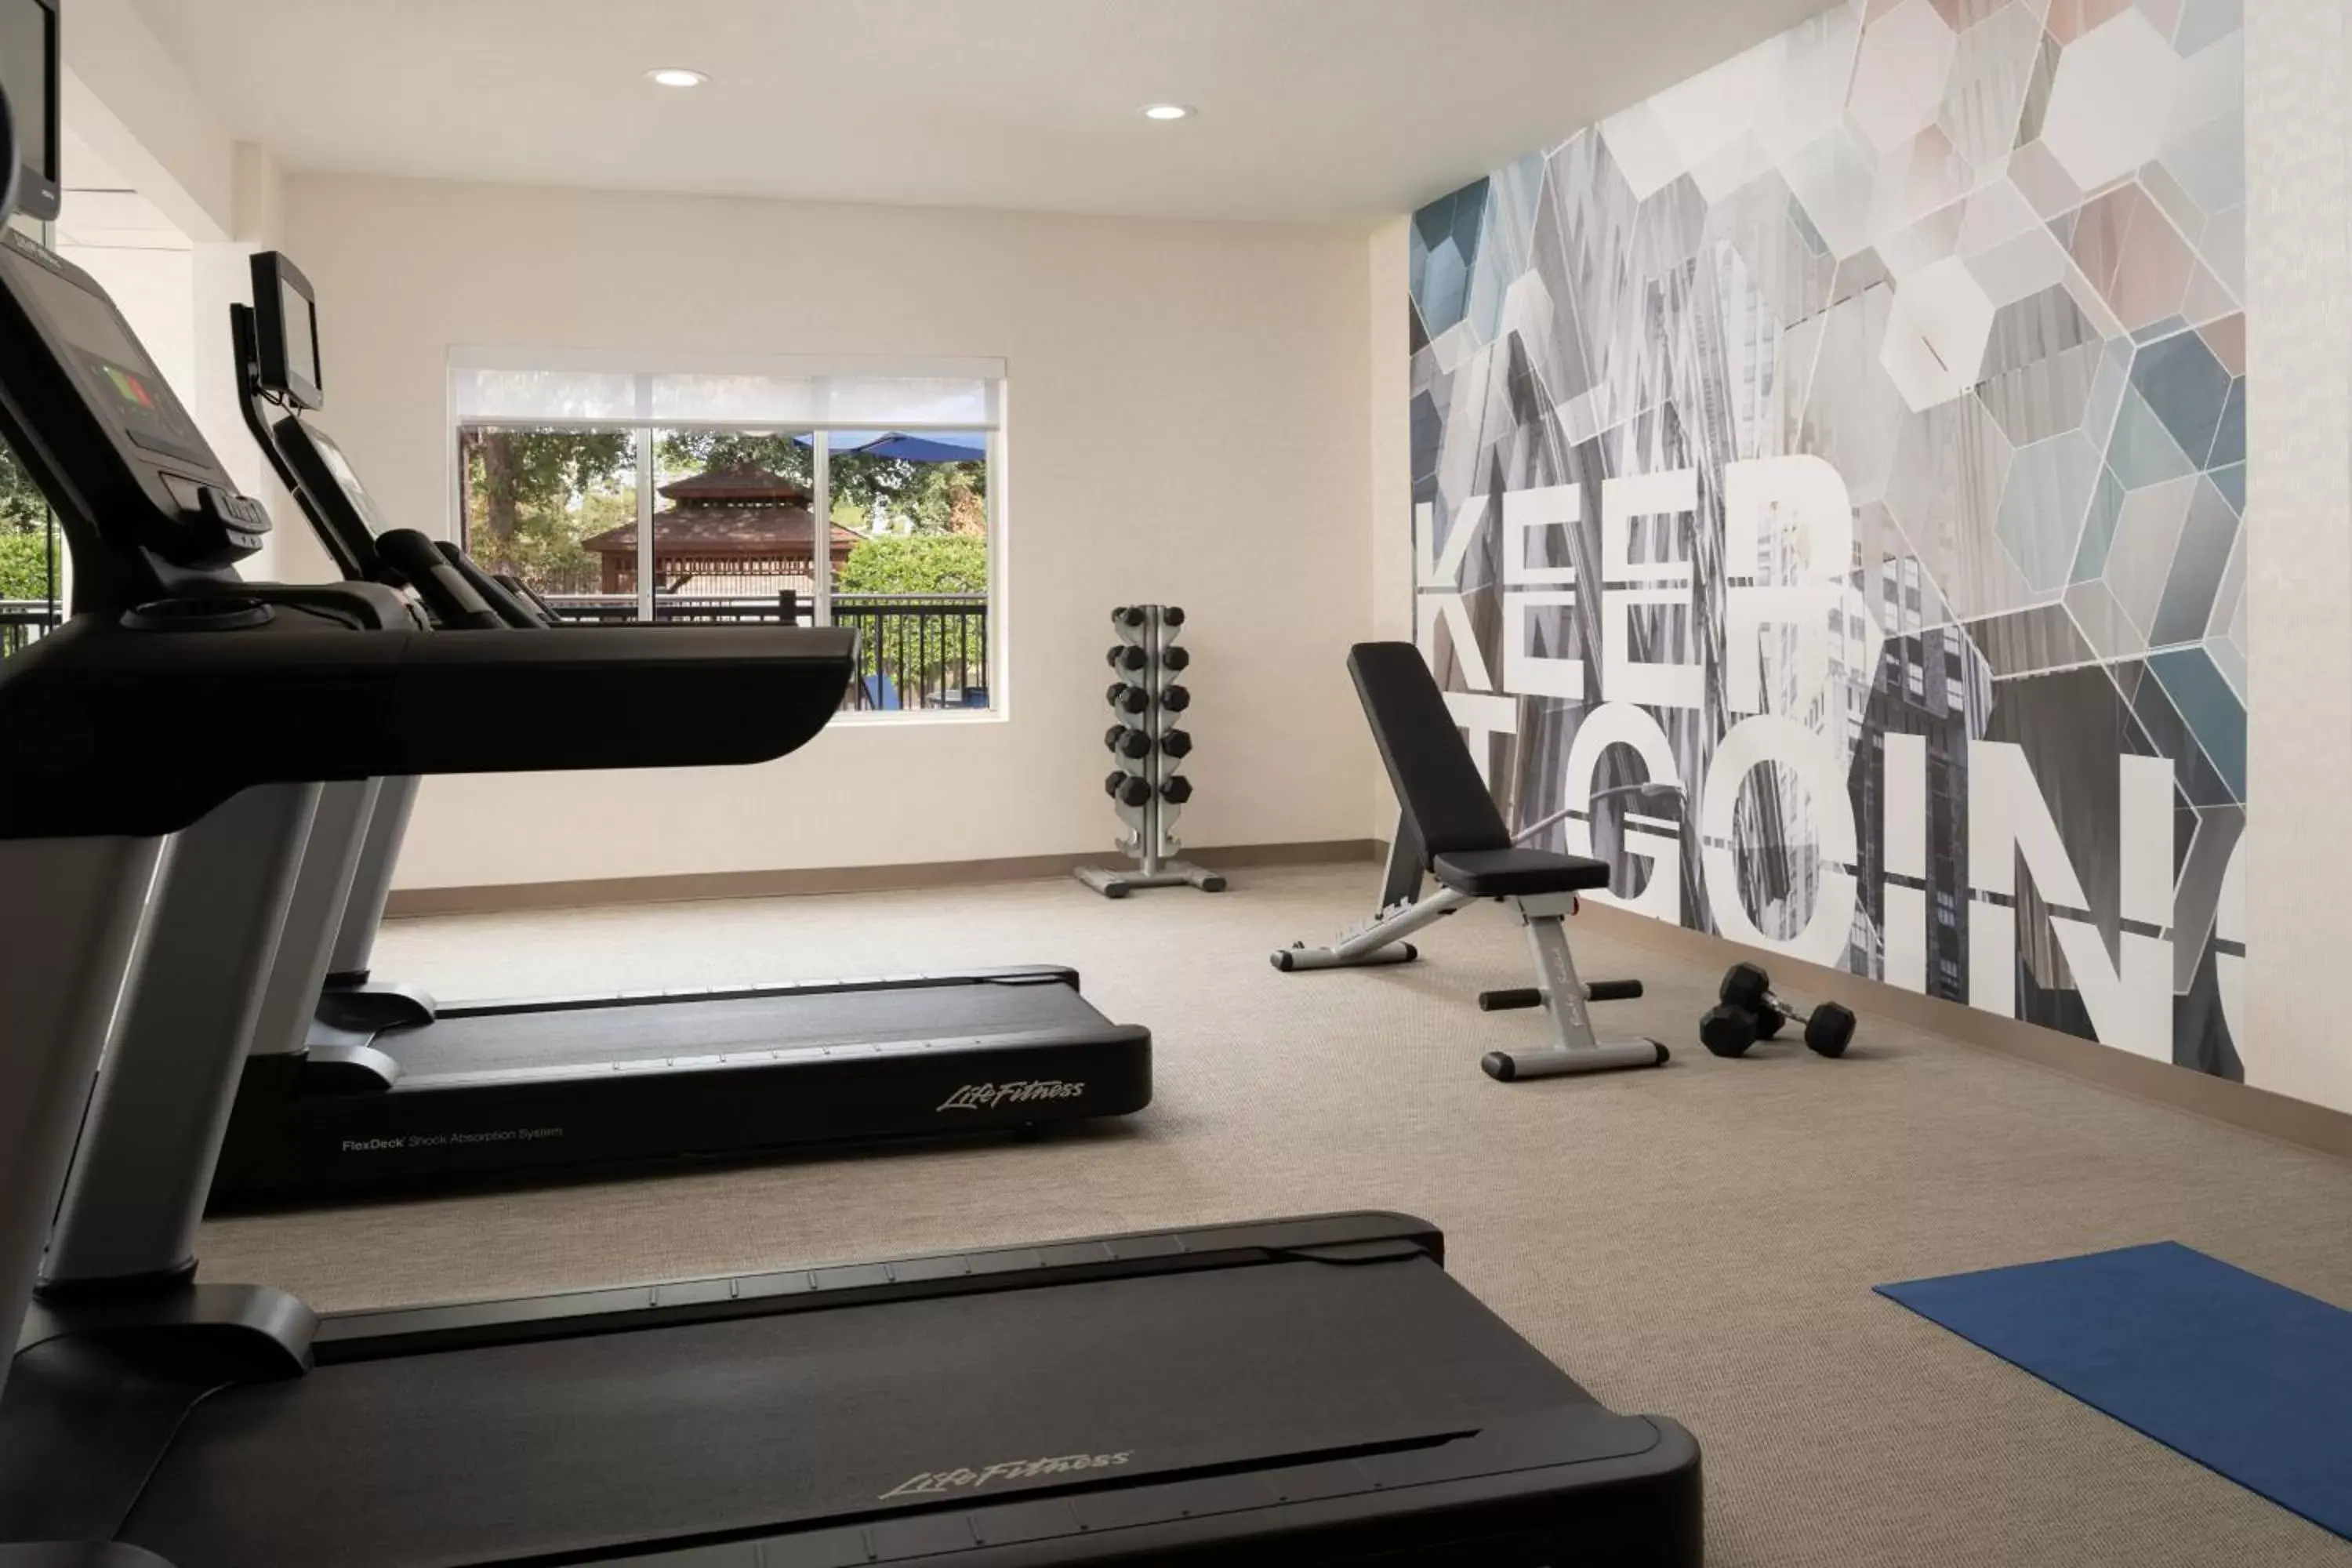 Fitness centre/facilities, Fitness Center/Facilities in SpringHill Suites Dallas Arlington North